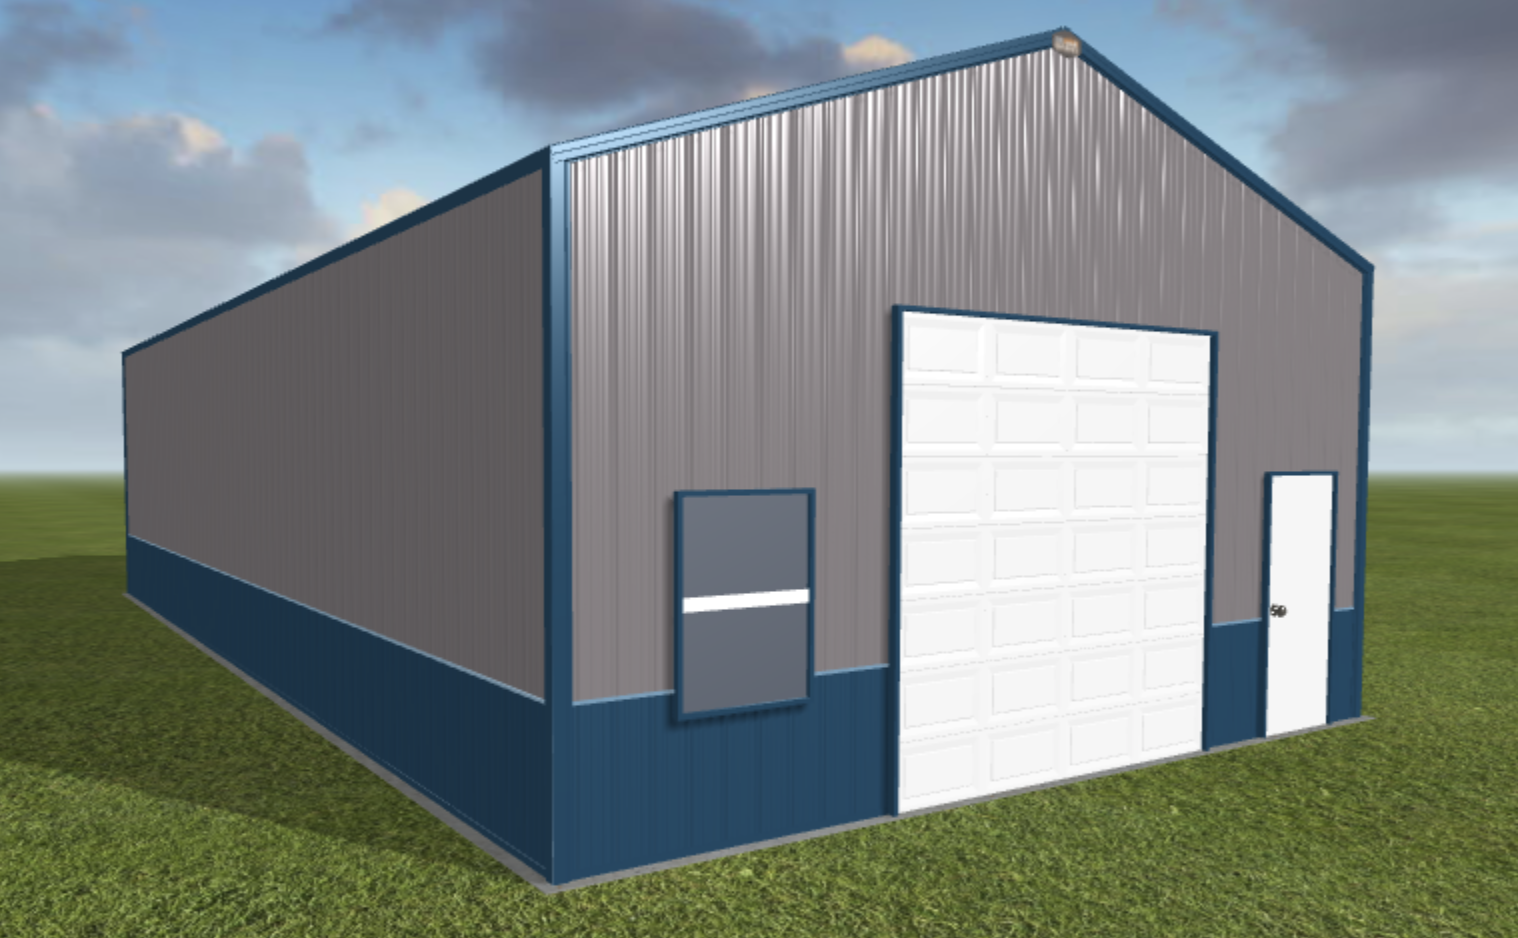 A 3d rendering of a metal building with a blue door.